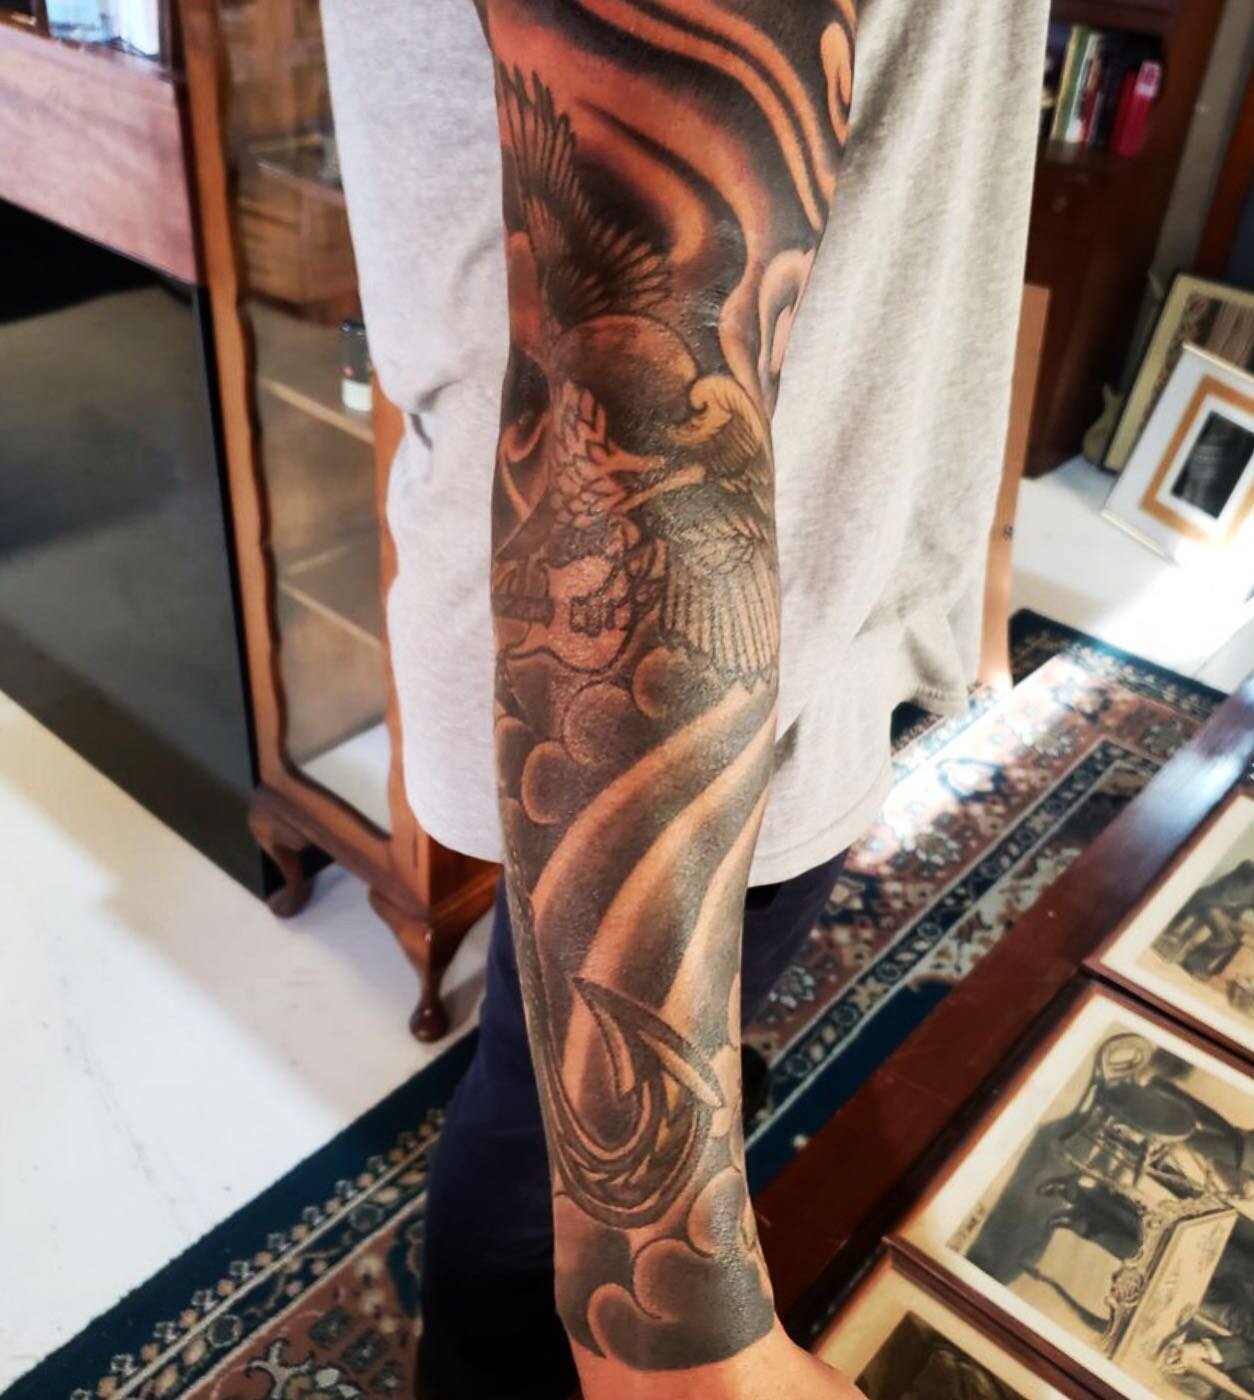 Sleeve steeze 🦅 

By @doctorrobertsohms 

#uptowntattoo #matakana #tattooed #tattooshop #tattoo #matakanacountrypark #sleevetattoo #sleevetattoos #eagletattoo #blacktattoo #balcktattooart #tattooart #tattooflash #doctorroberts #doctorrobertsohms #ma